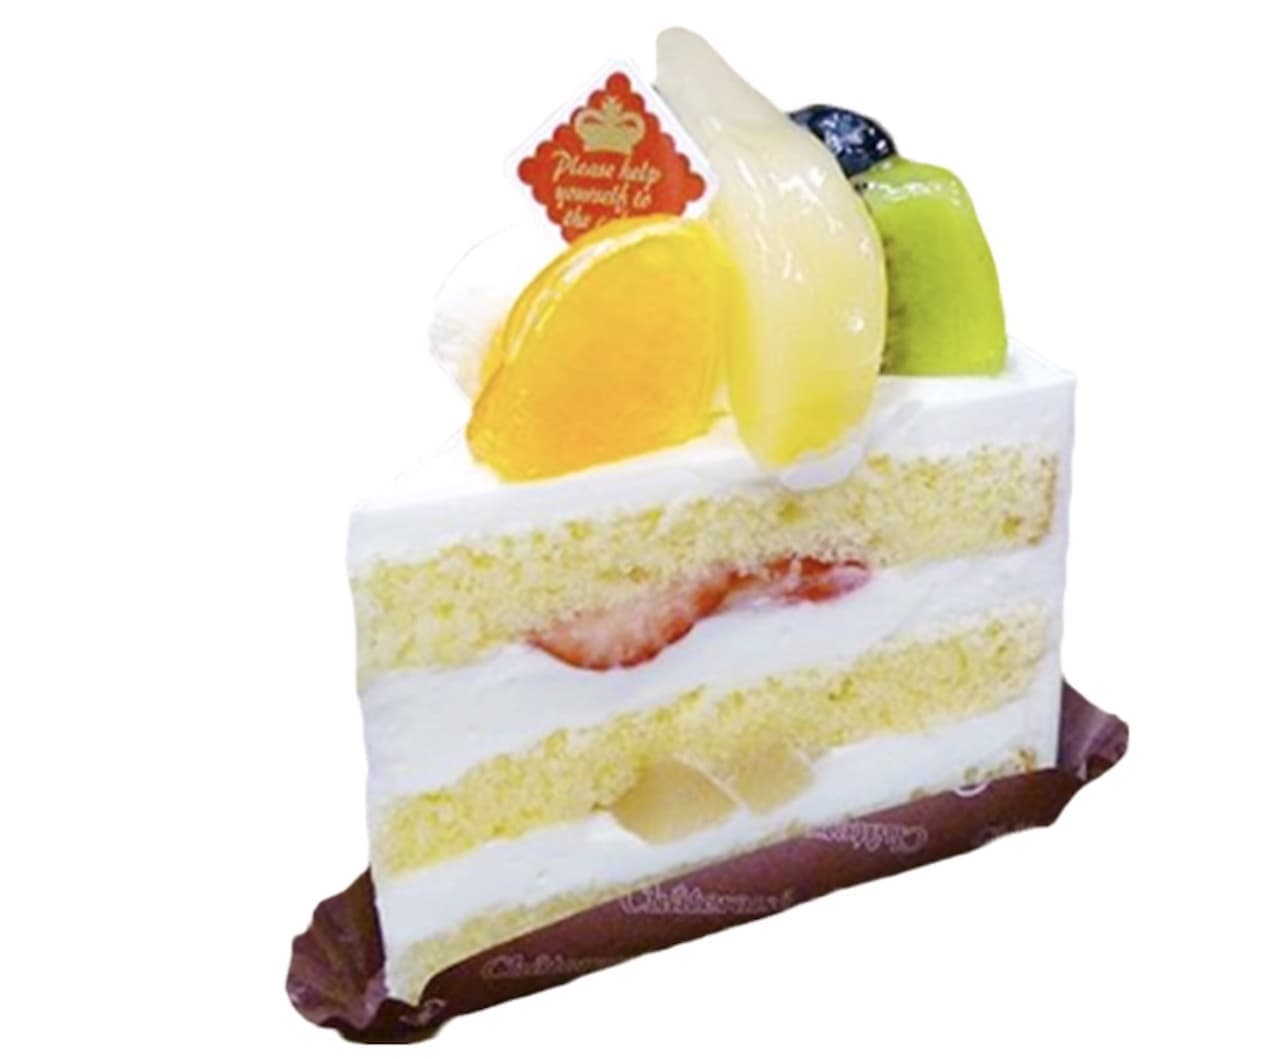 Chateraise "Pear and Fruit Premium Pure Cream Shortcake"